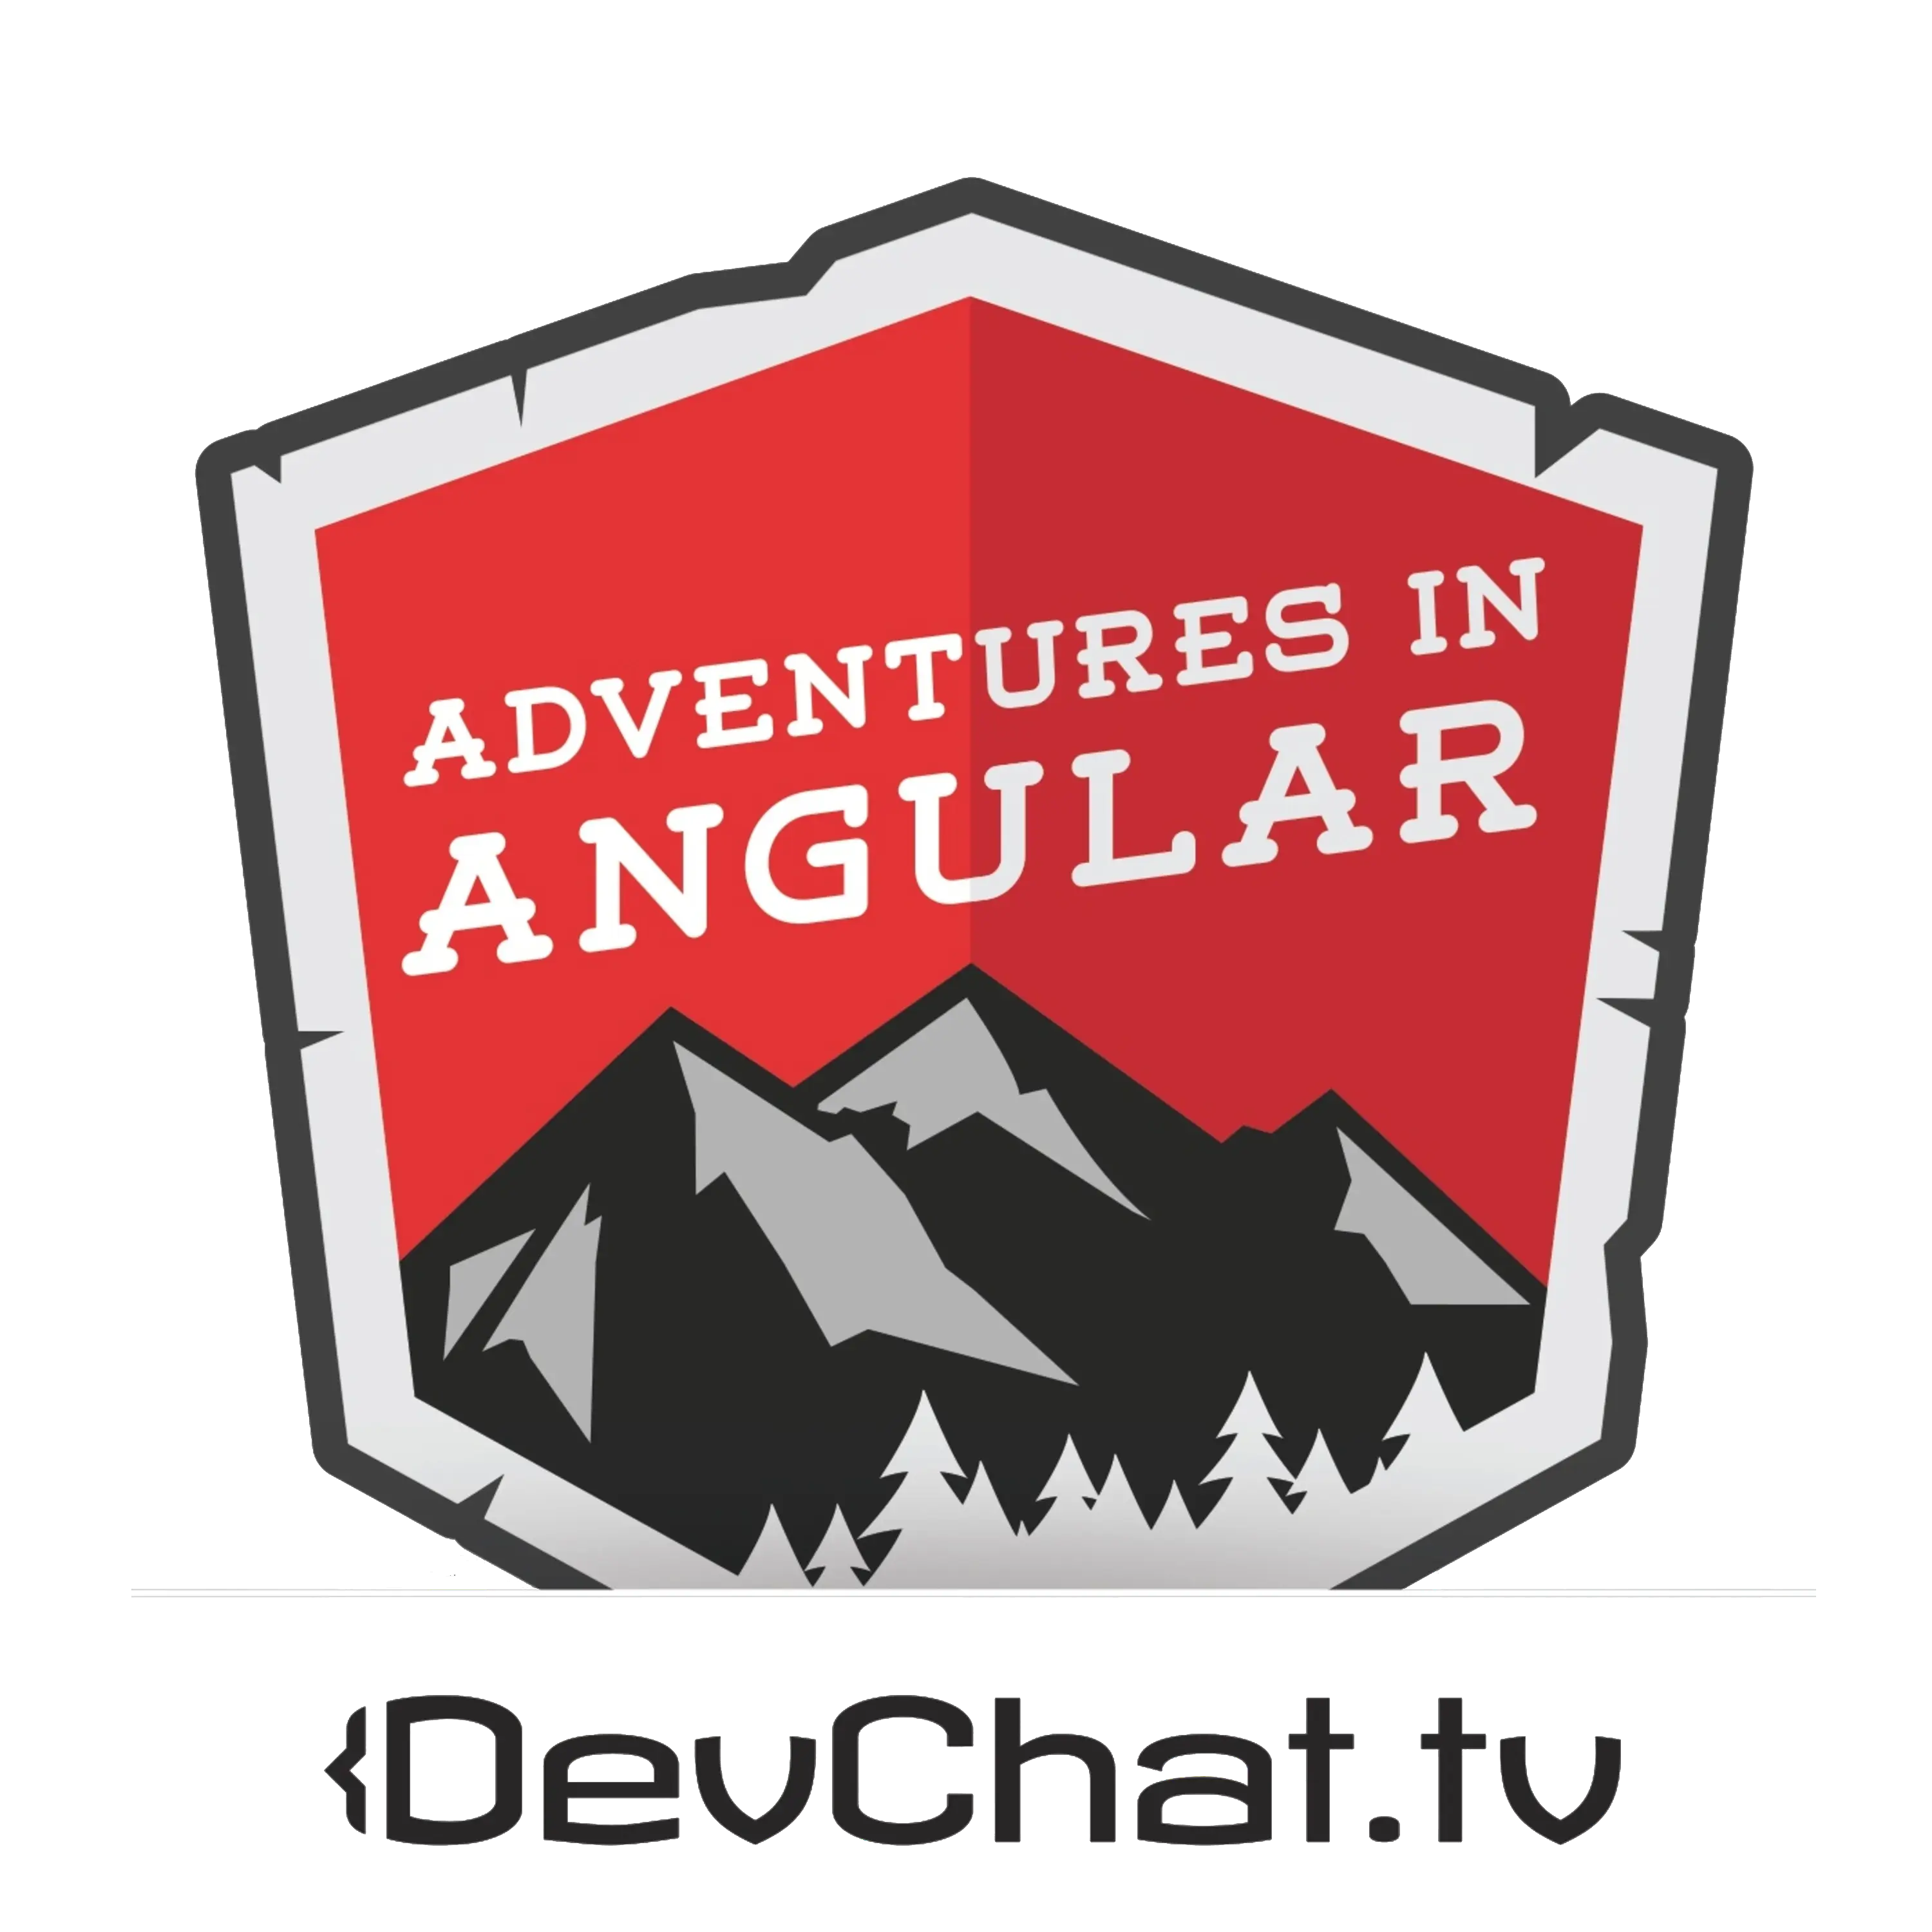 Adventure in Angular